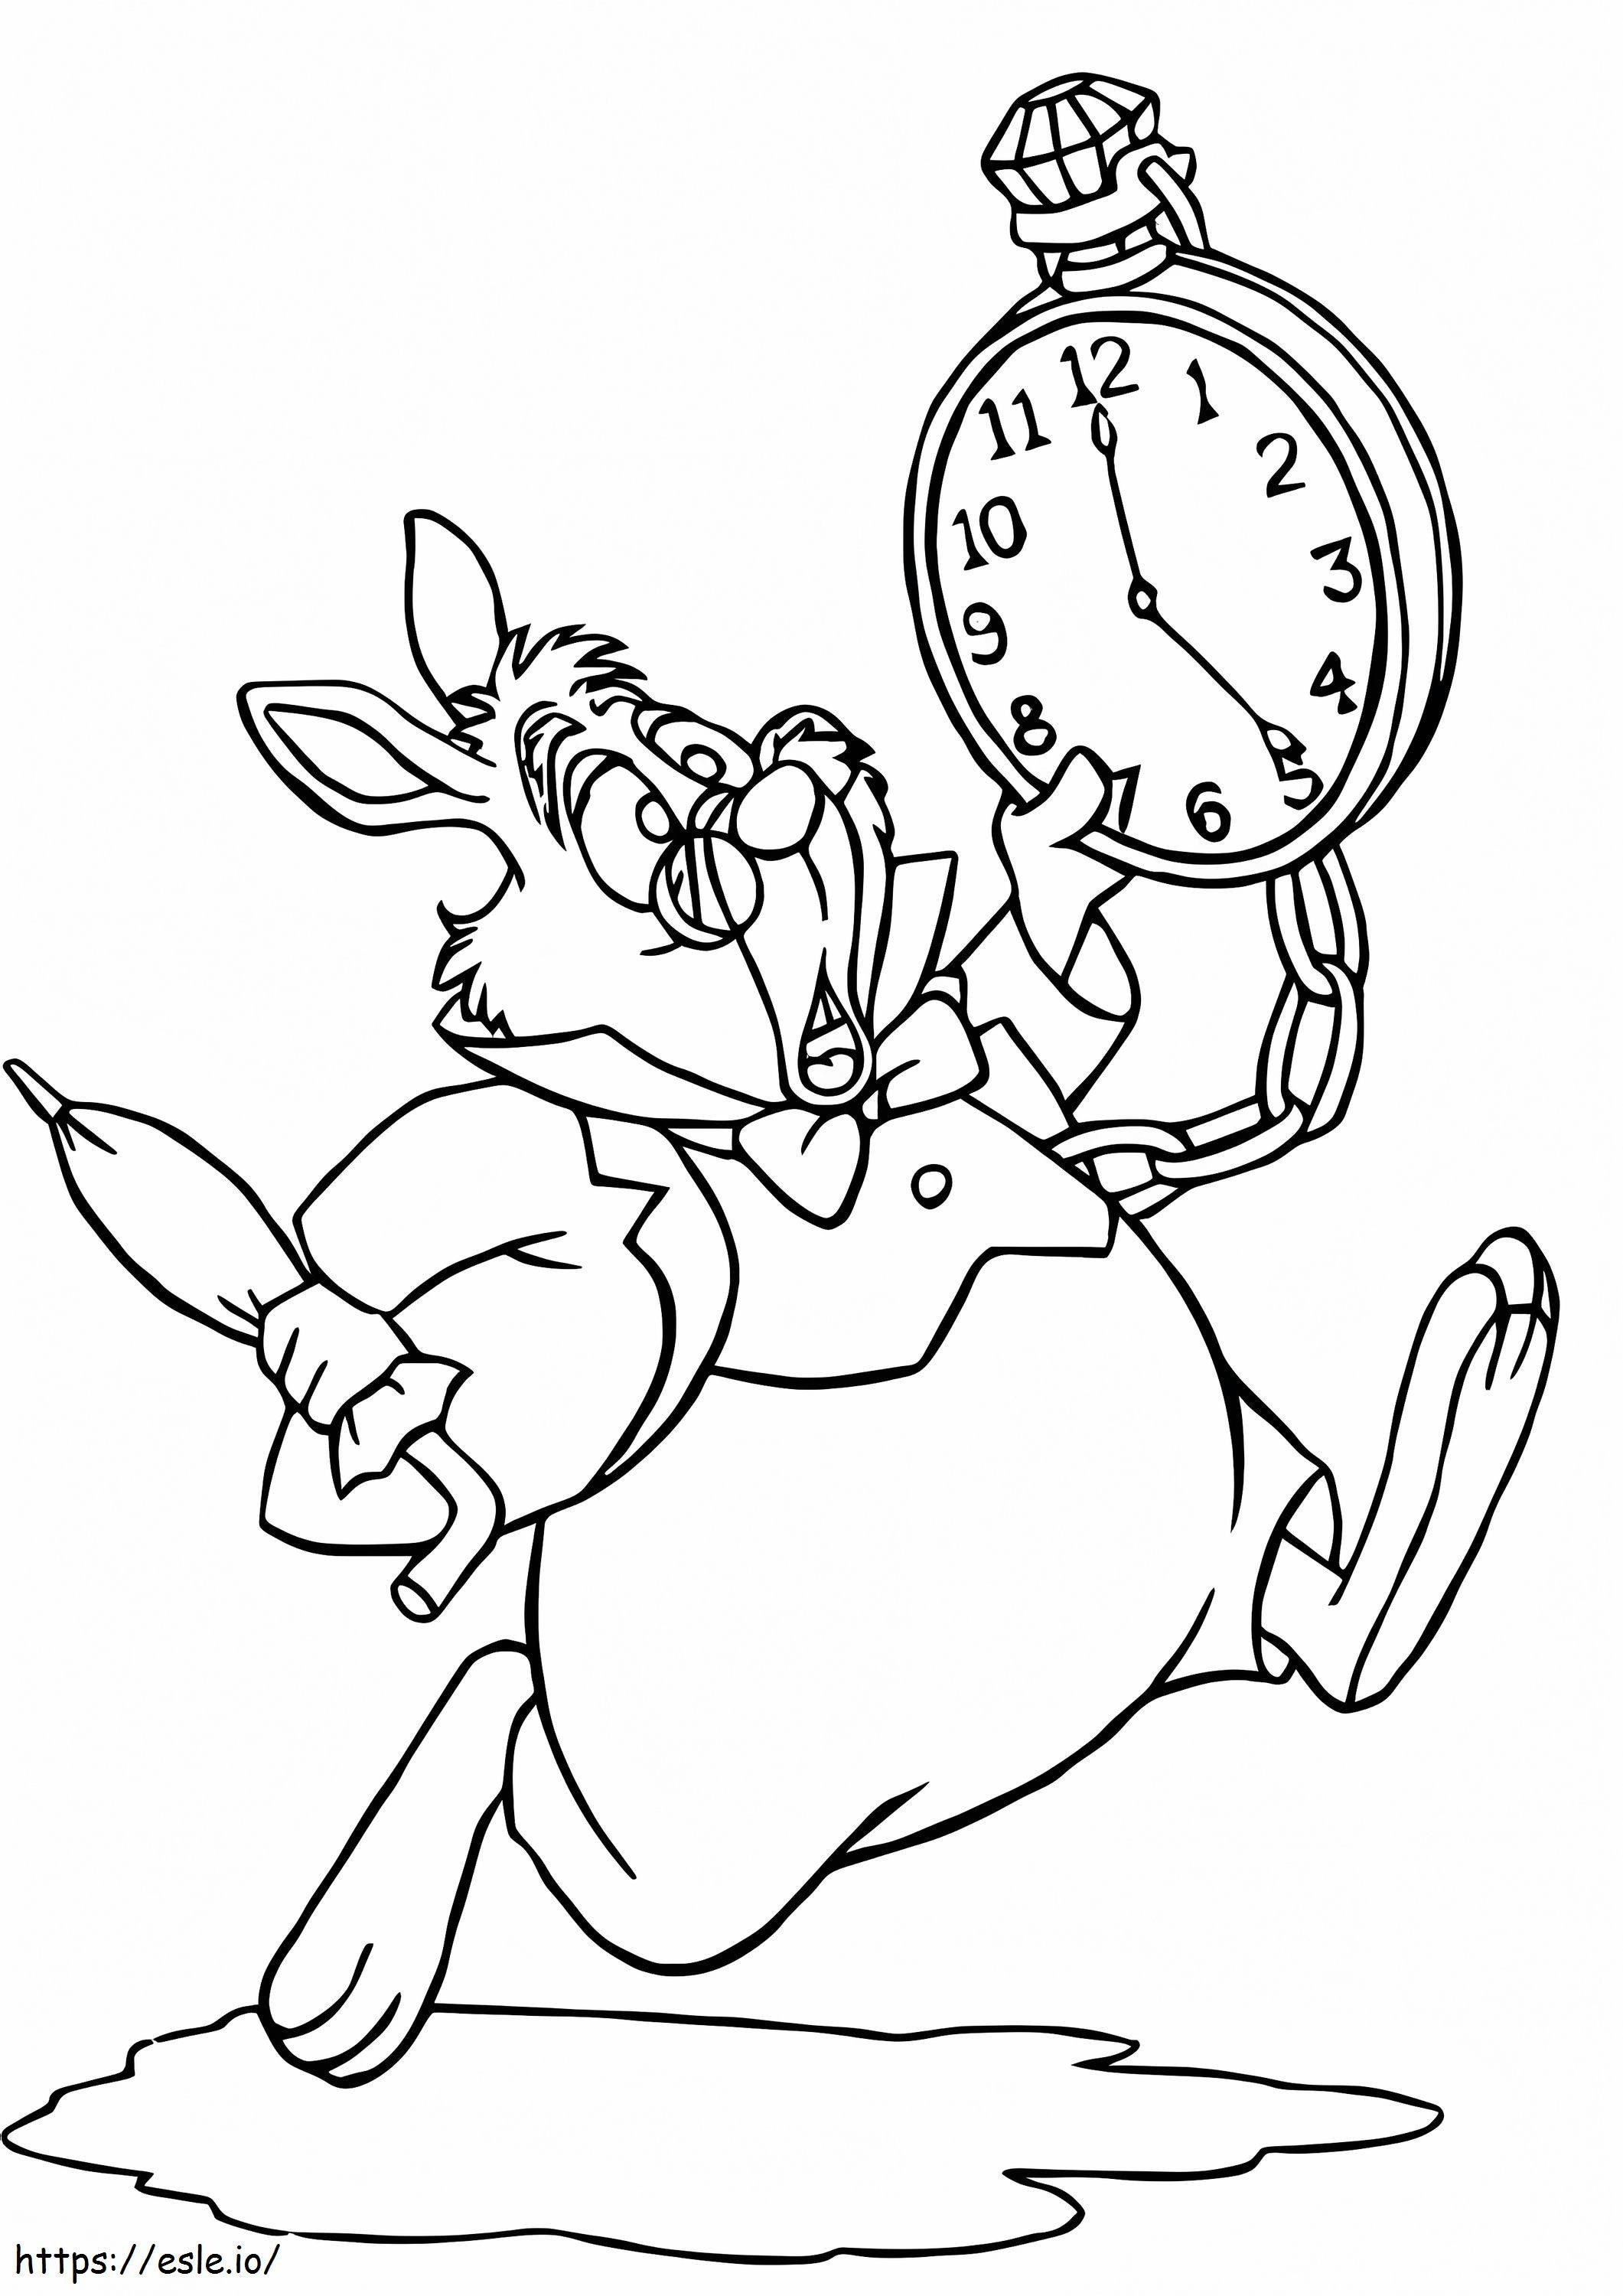 Coloriage Lapin de dessin animé tenant l'horloge à imprimer dessin